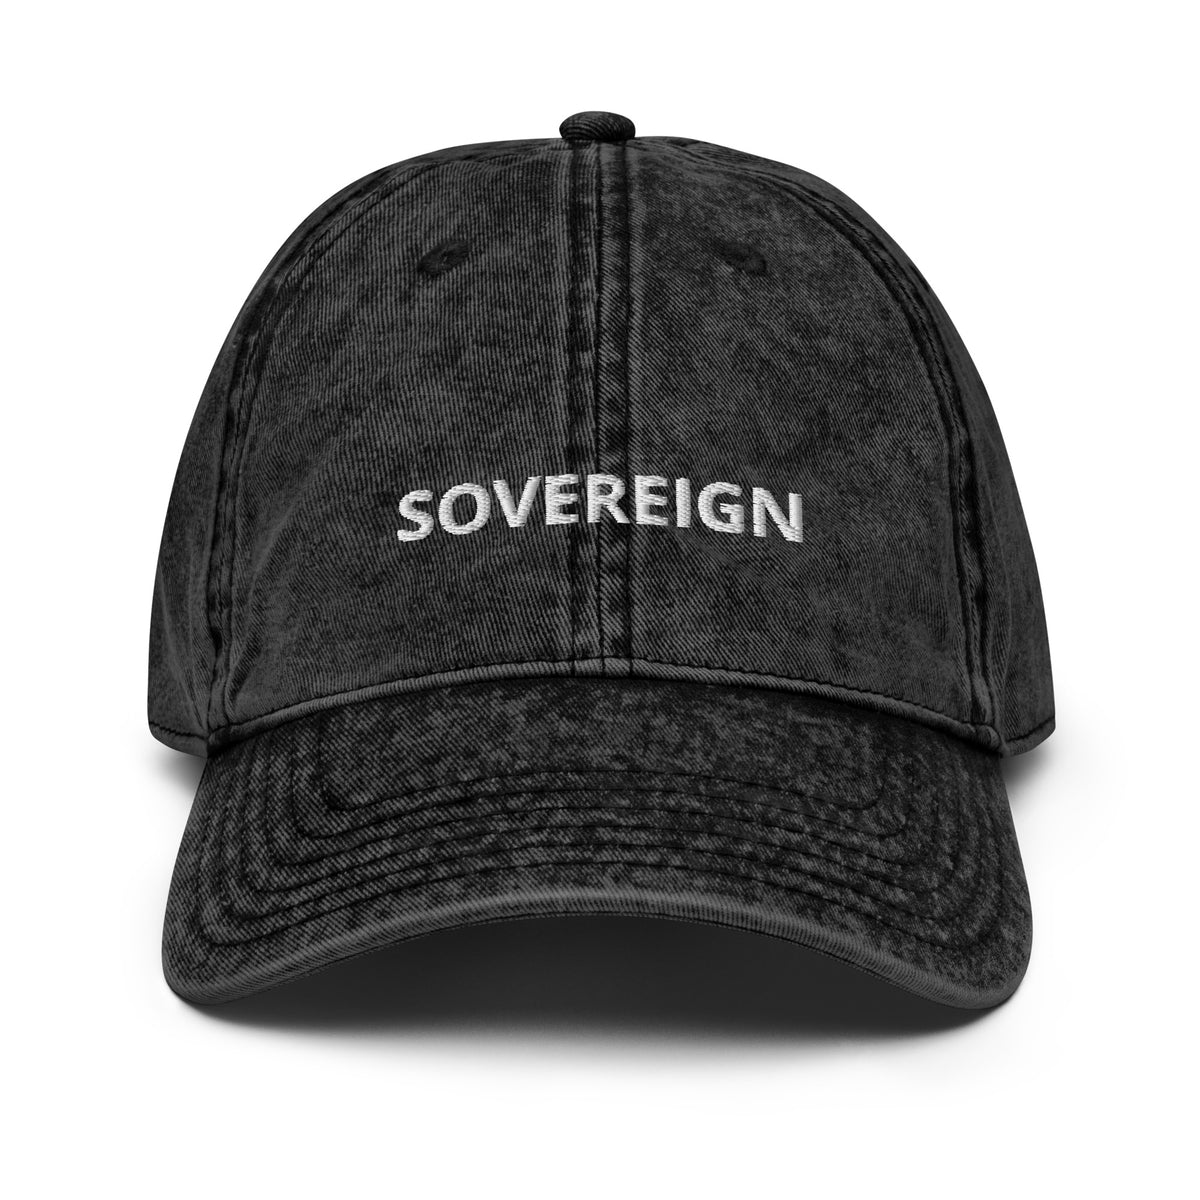 Sovereign Bitcoin Vintage Hat - fomo21